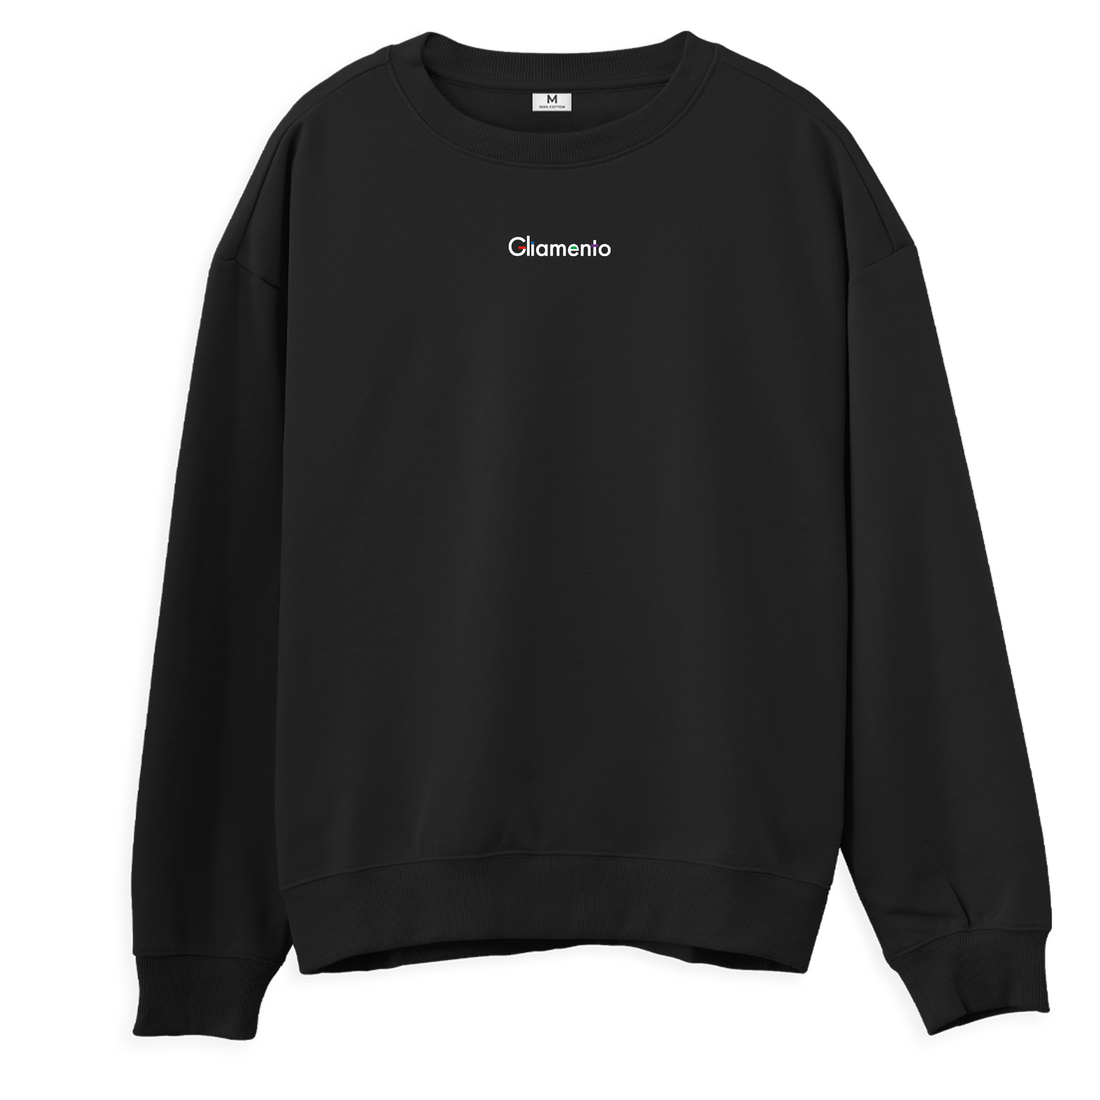 Gliamento Style - Sweatshirt